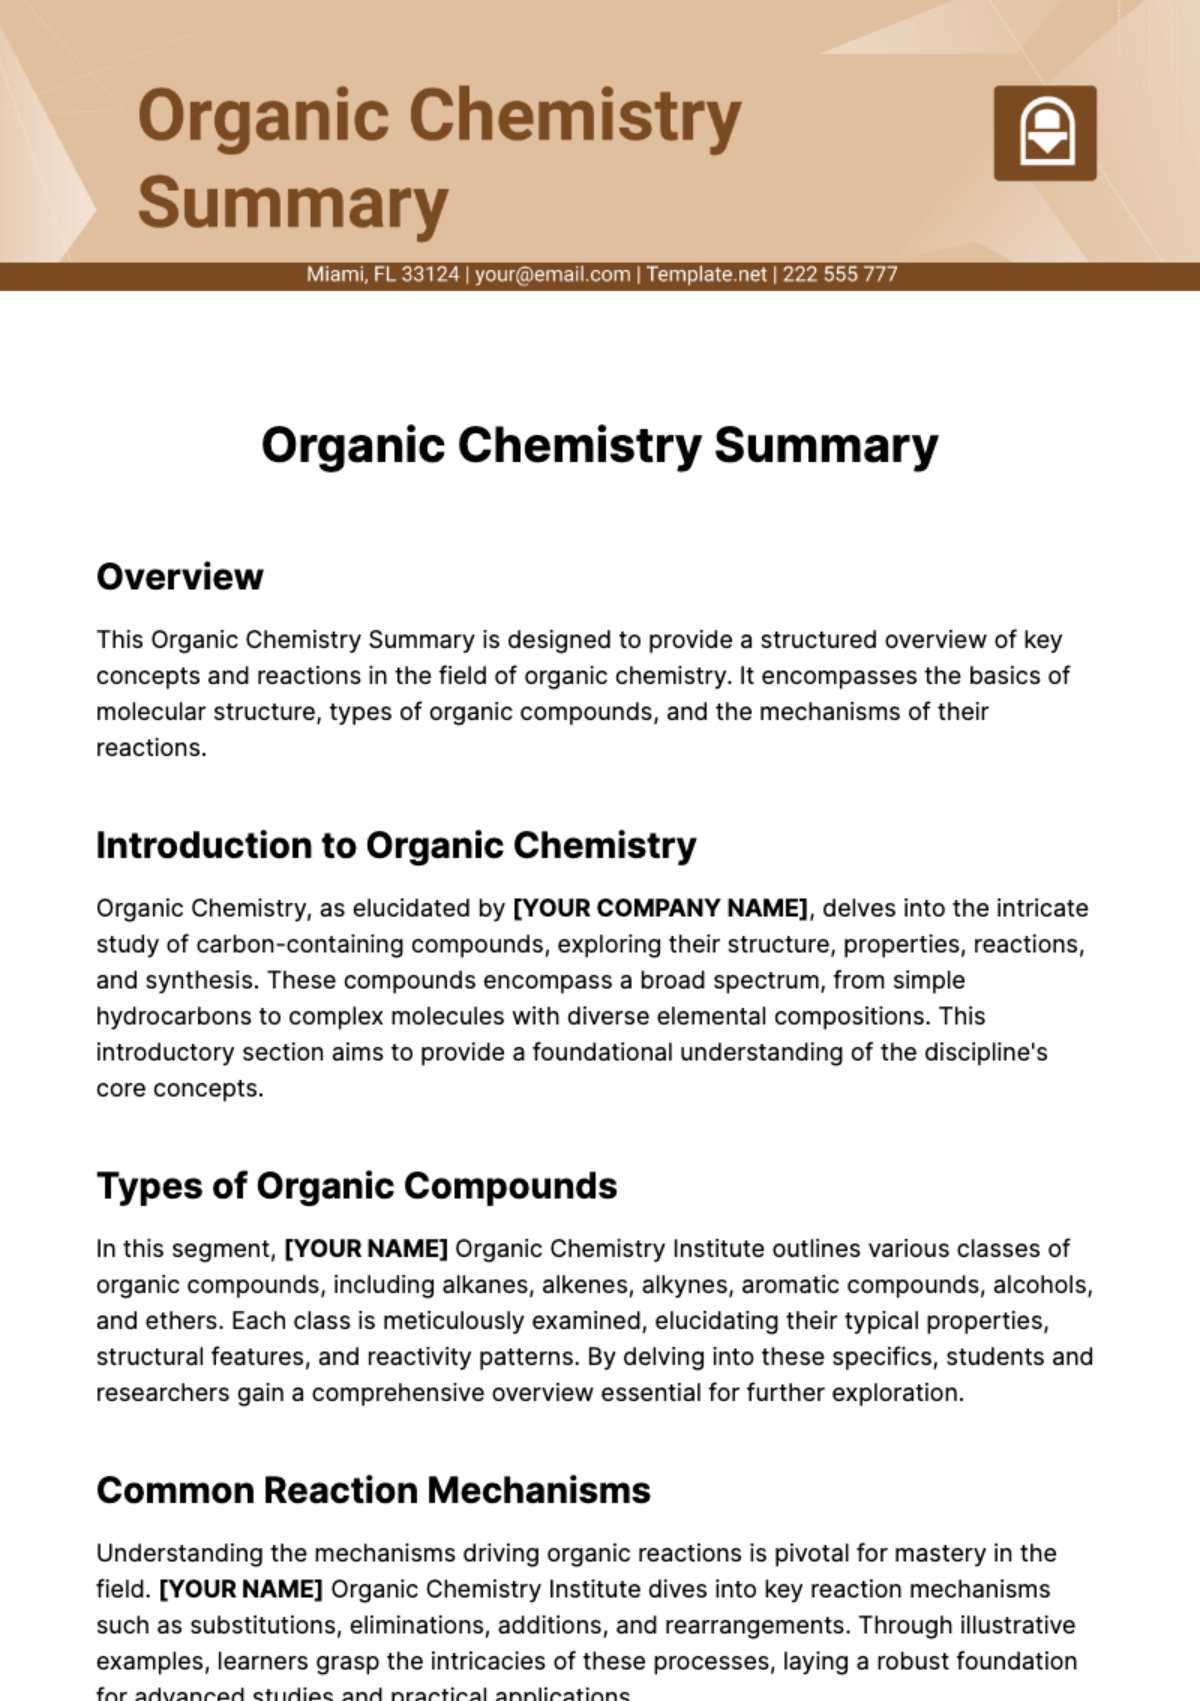 Organic Chemistry Summary Template